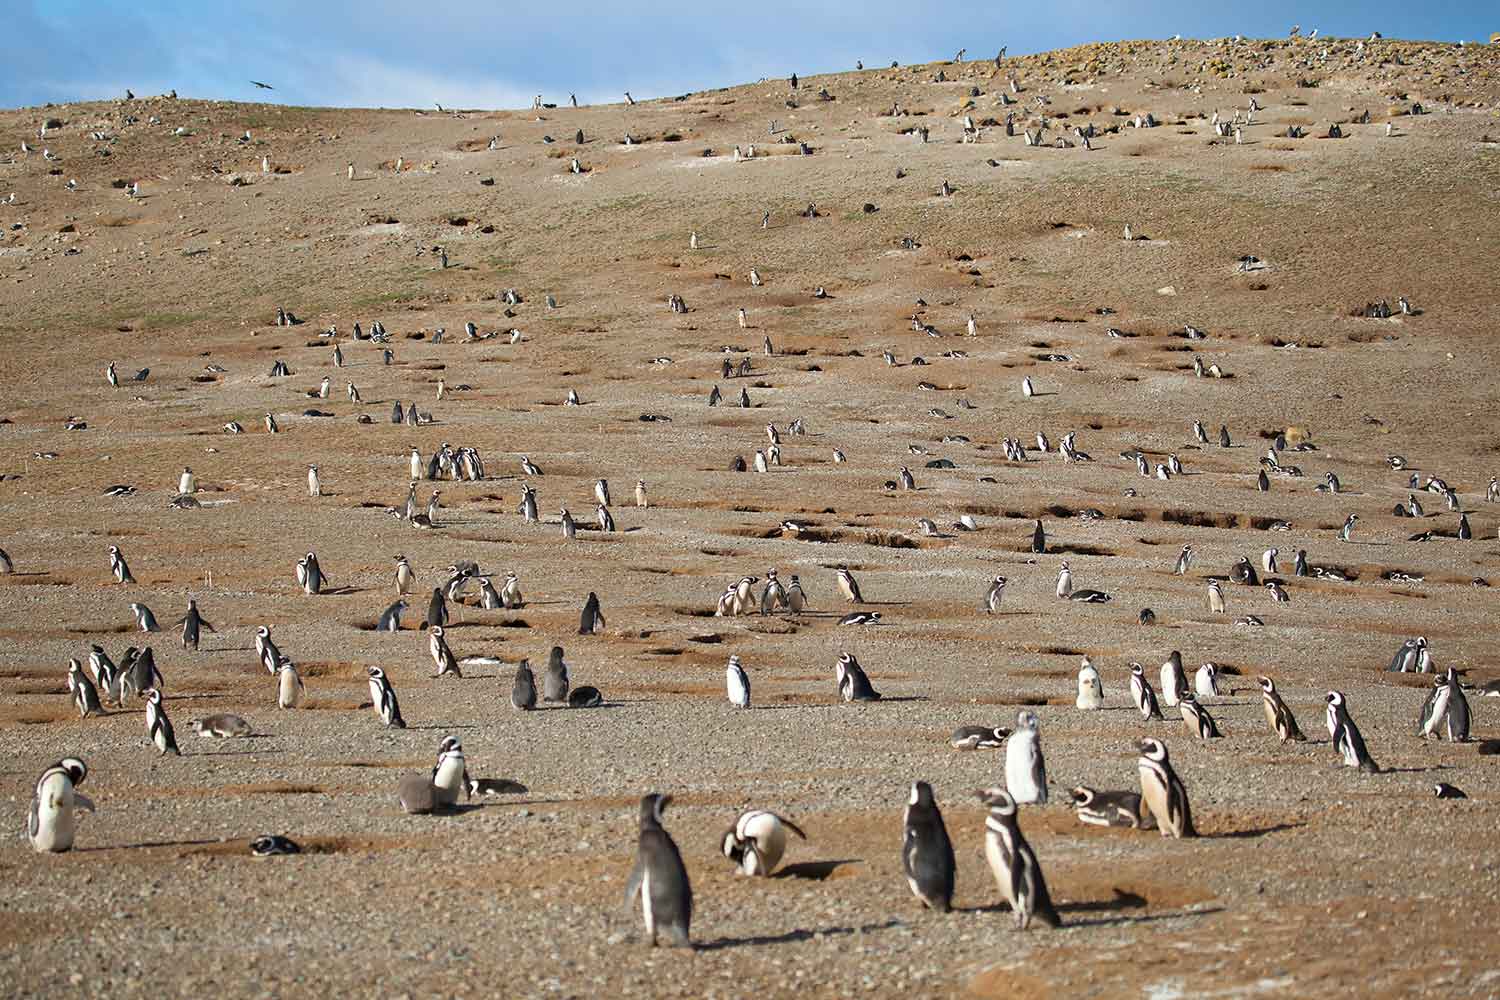 Penguin colony on a barren brown landscape